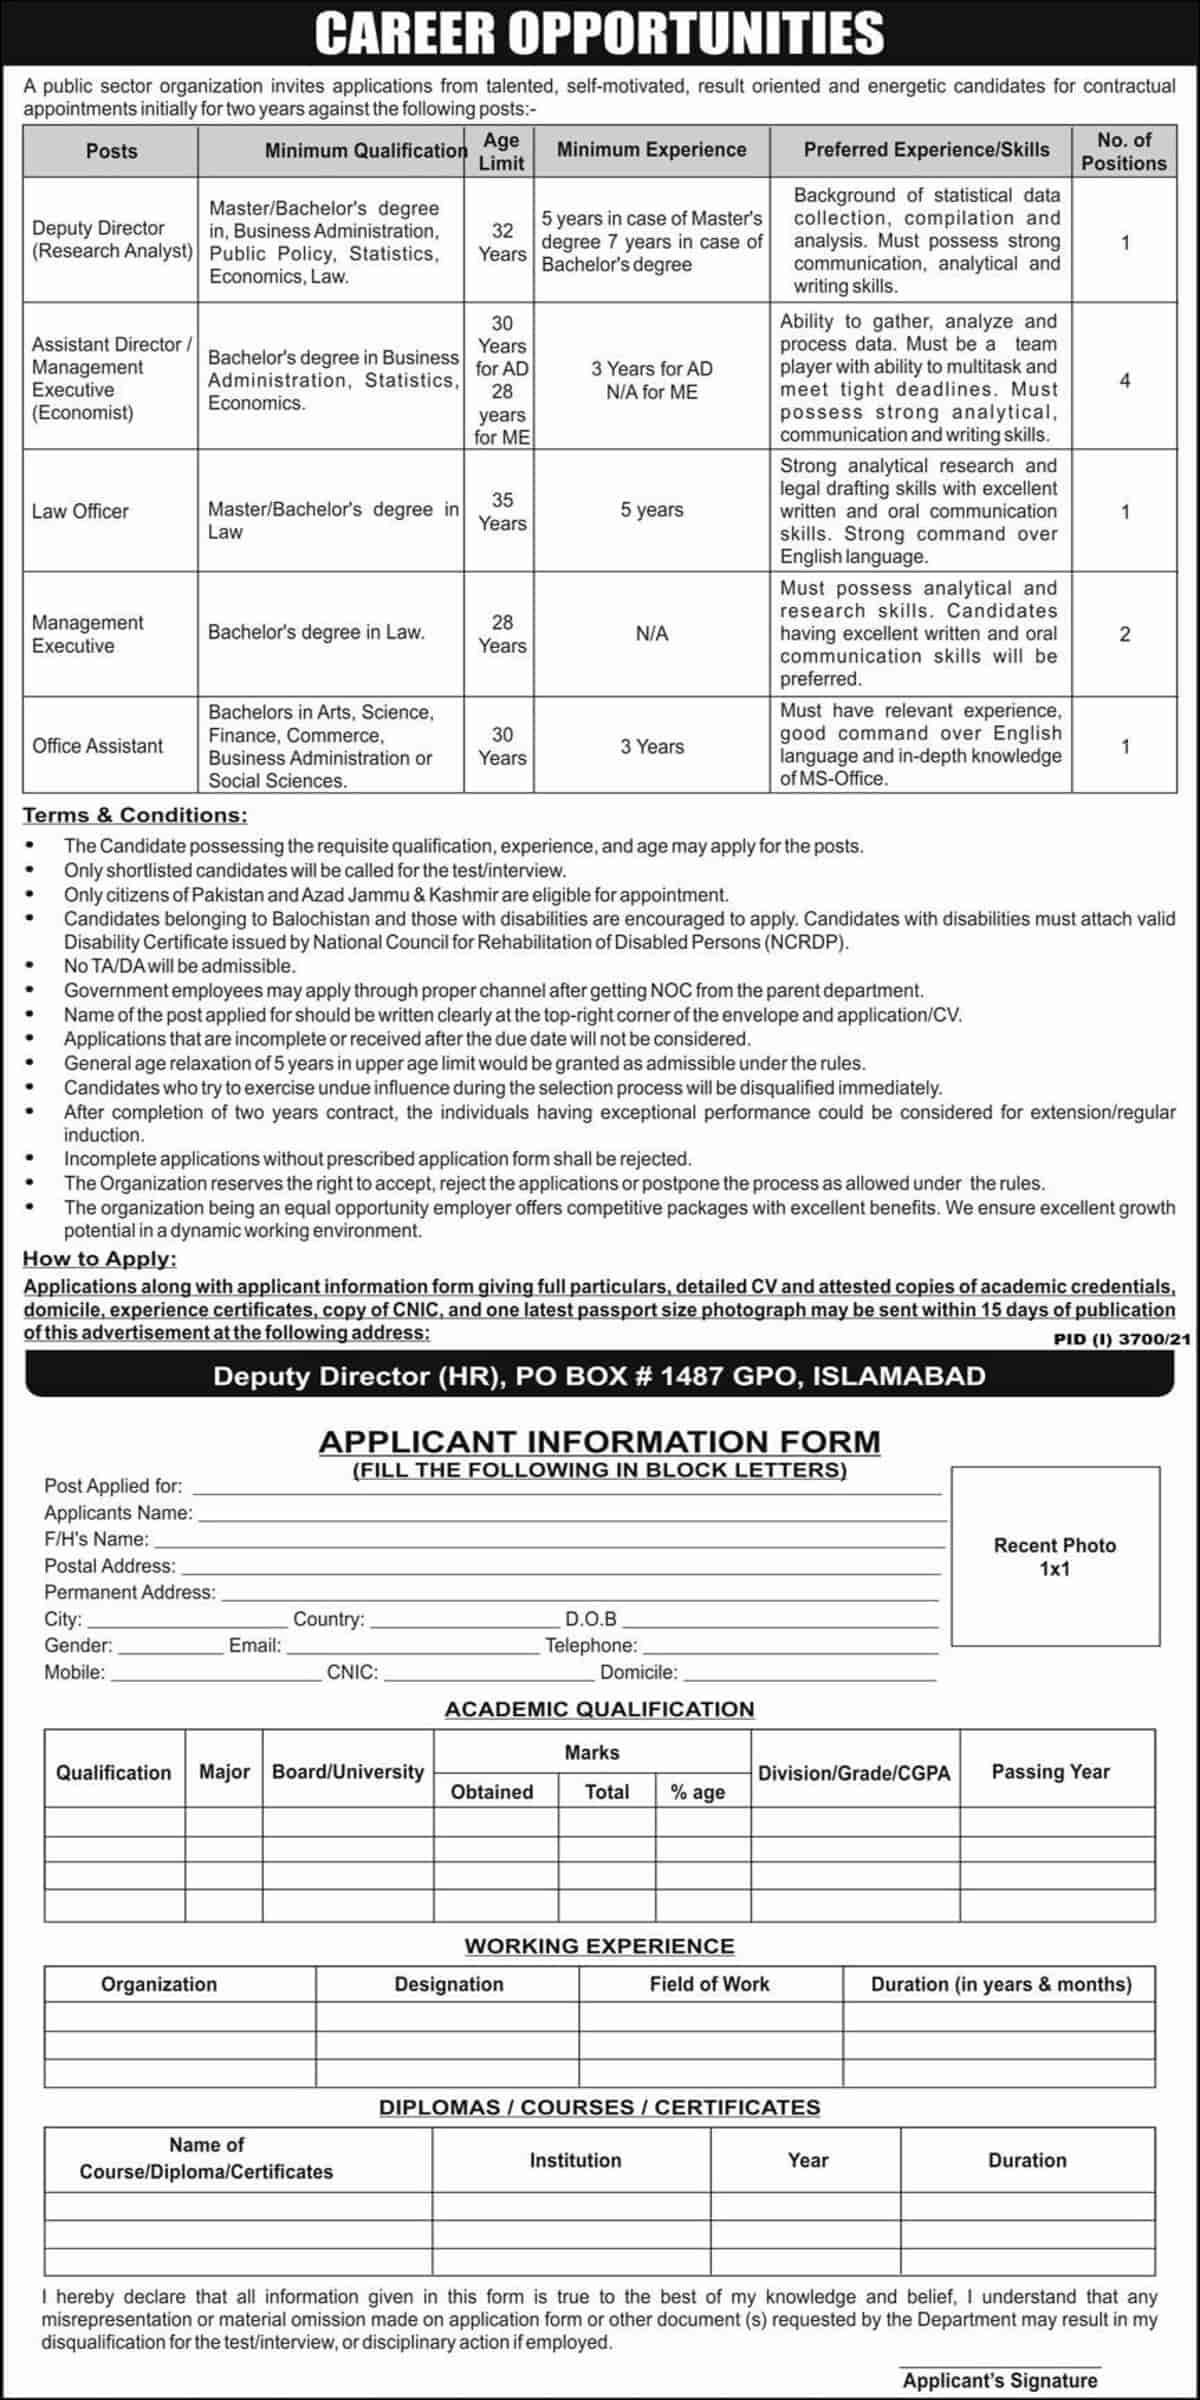 Atomic Energy Commission PAEC Jobs 2021 PO Box 1487 GPO Islamabad